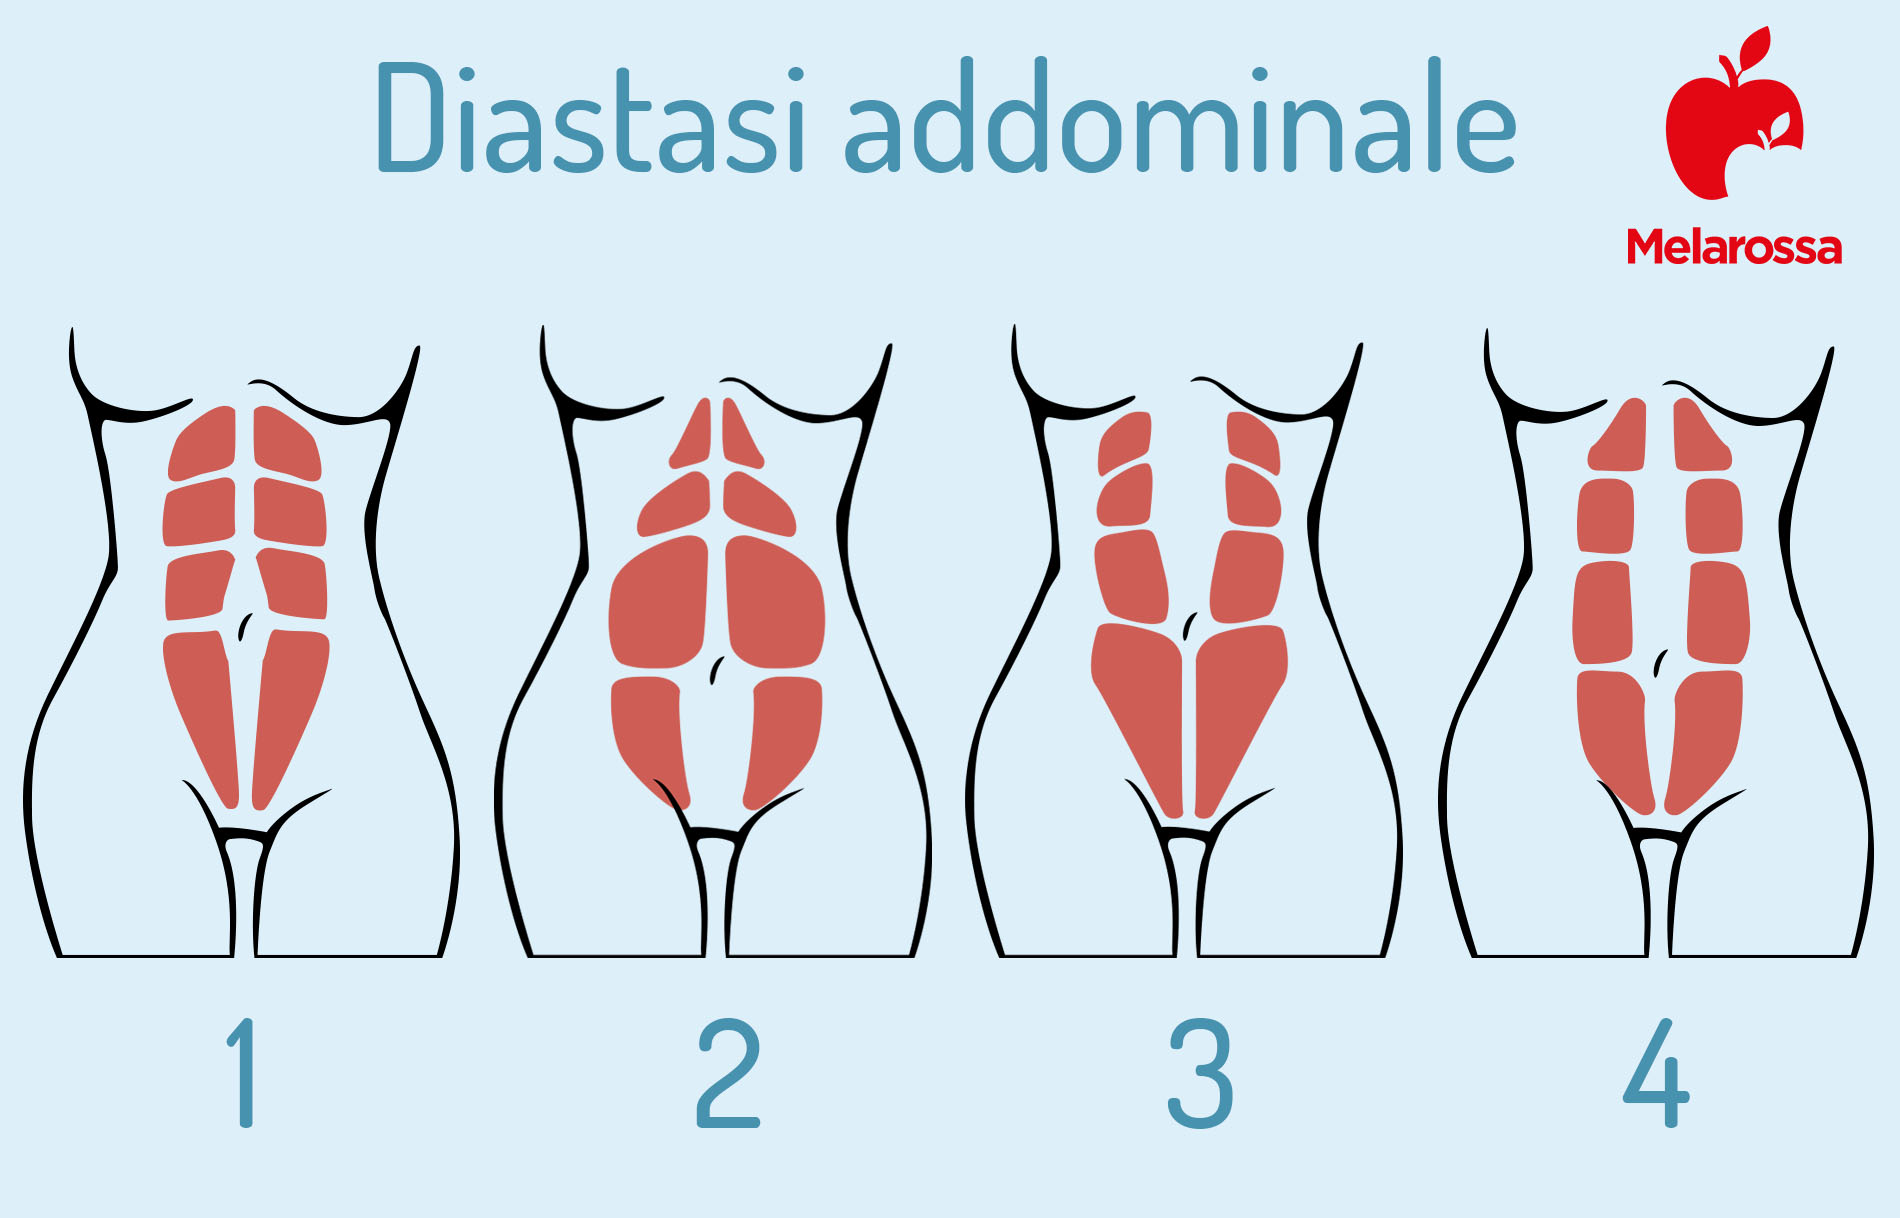 diastasi addominale: classificazione